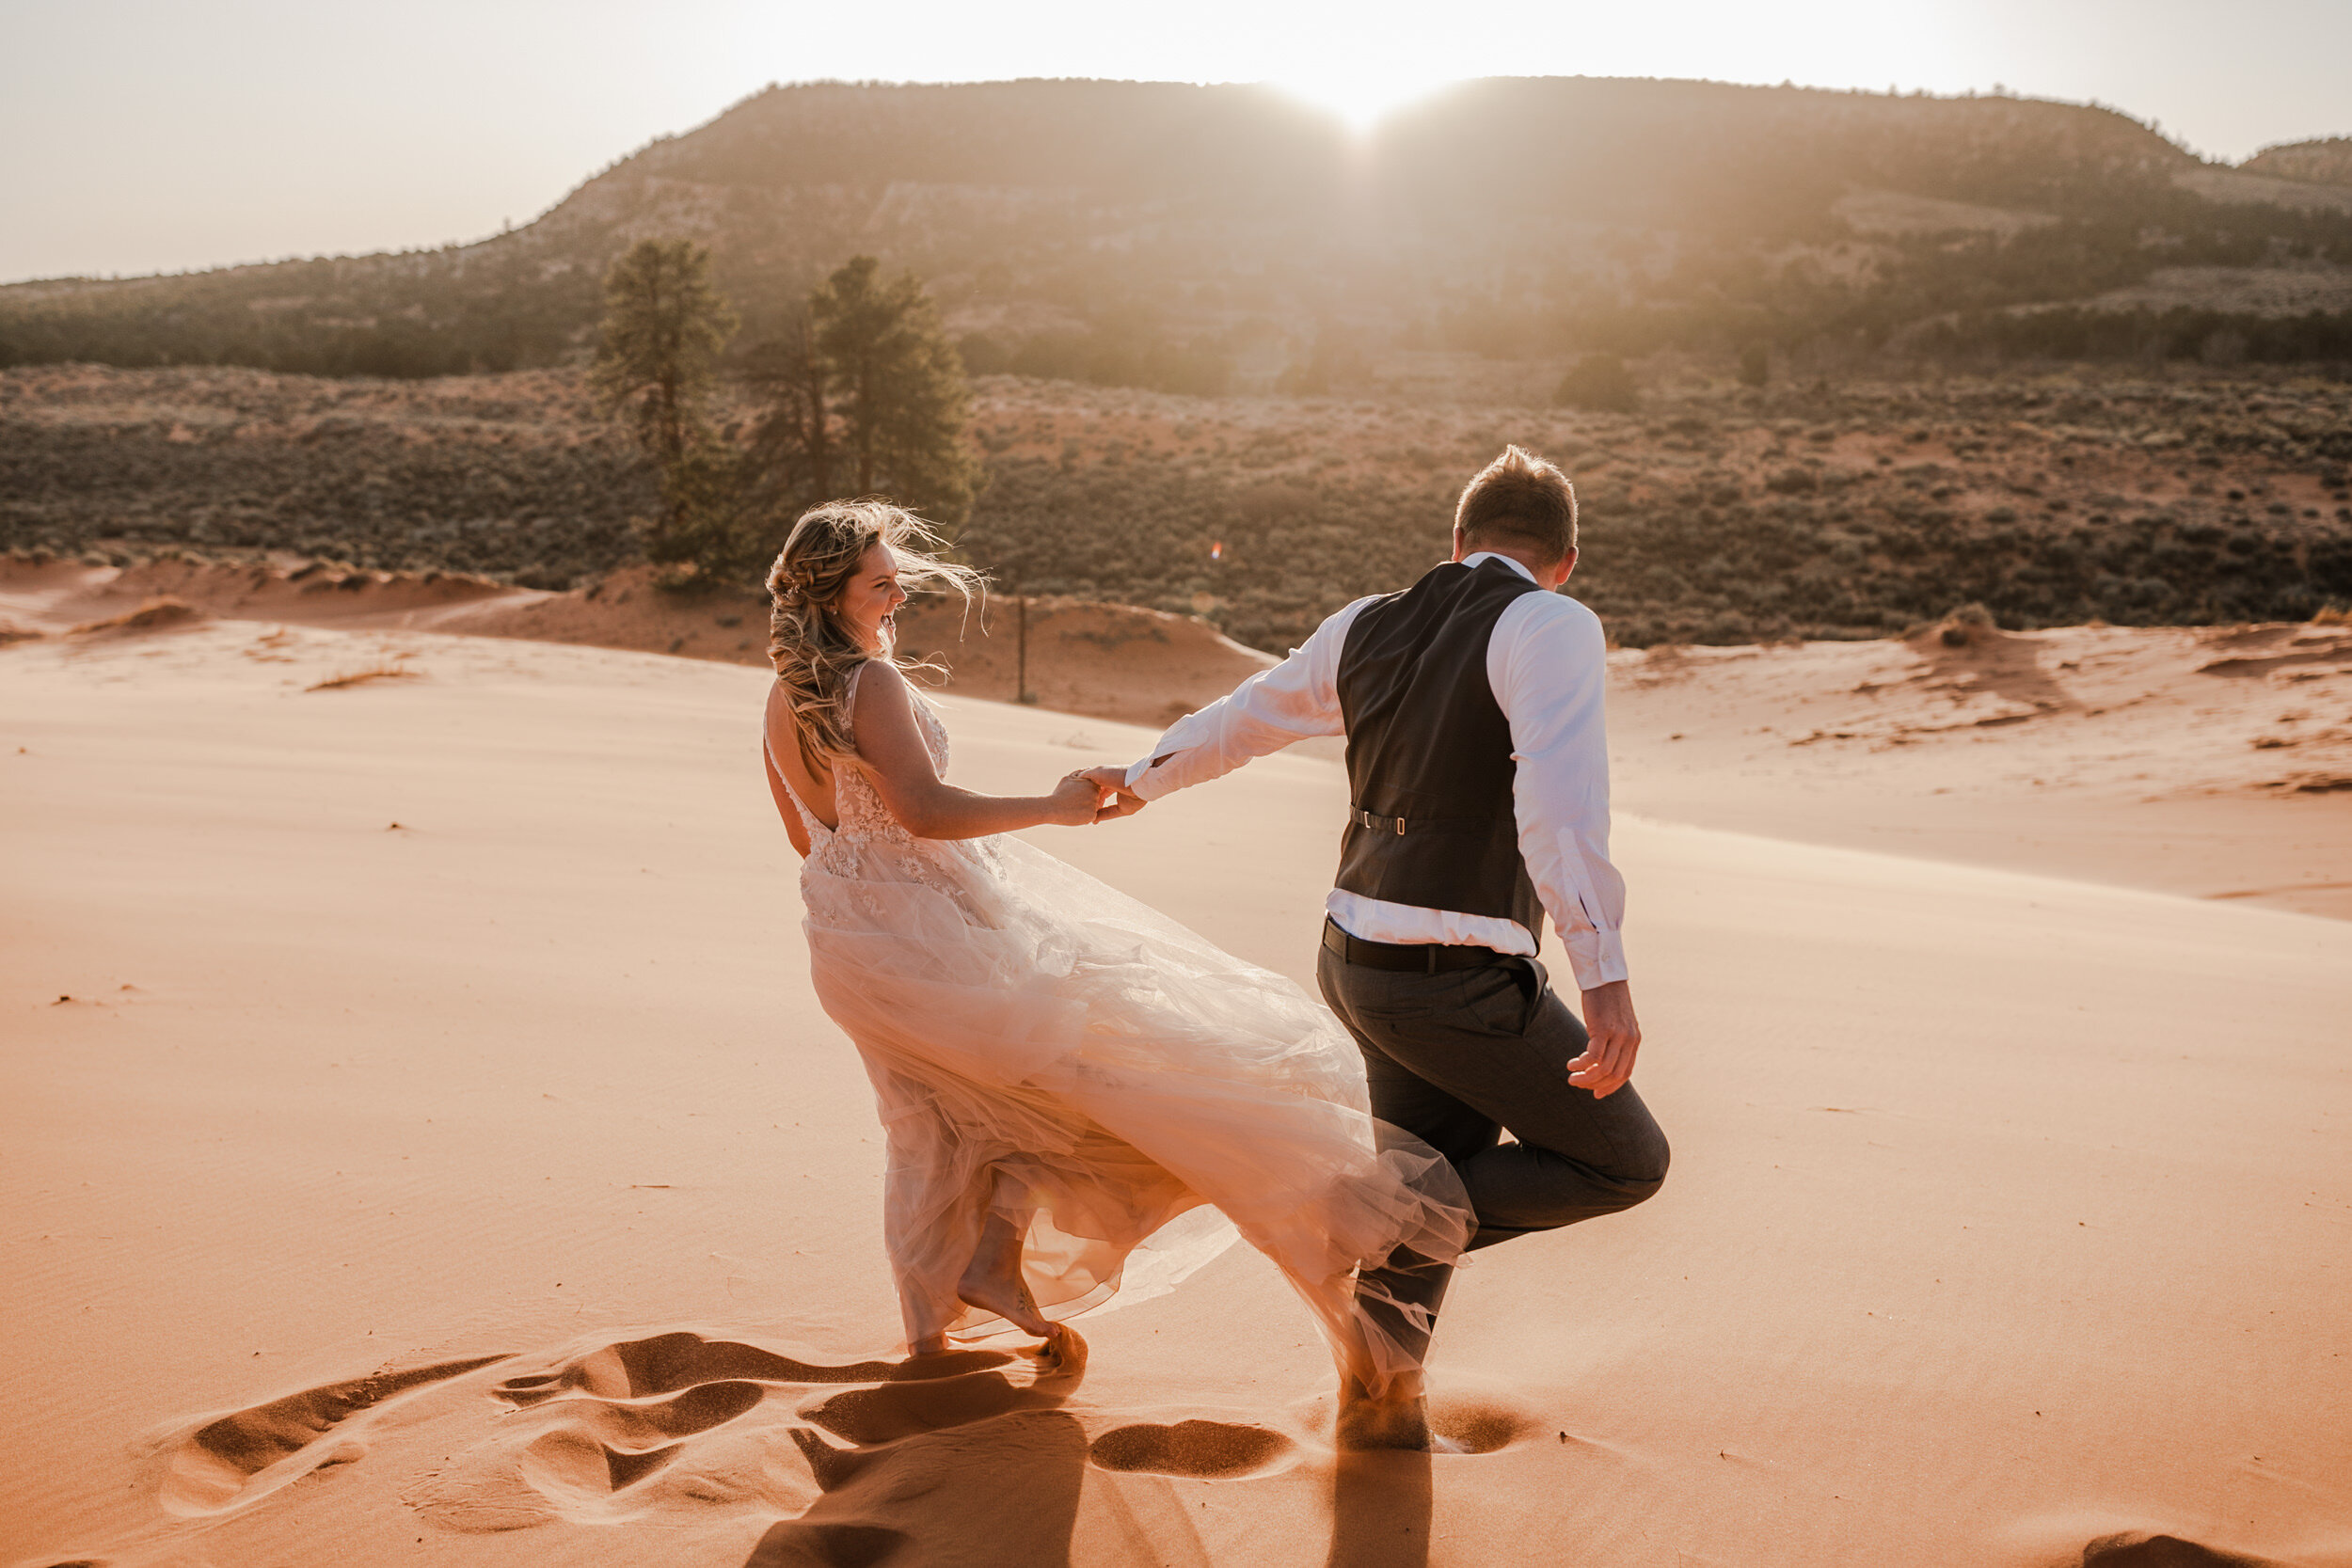 Intimate Utah Elopement | Nature Wedding | The Hearnes Photography